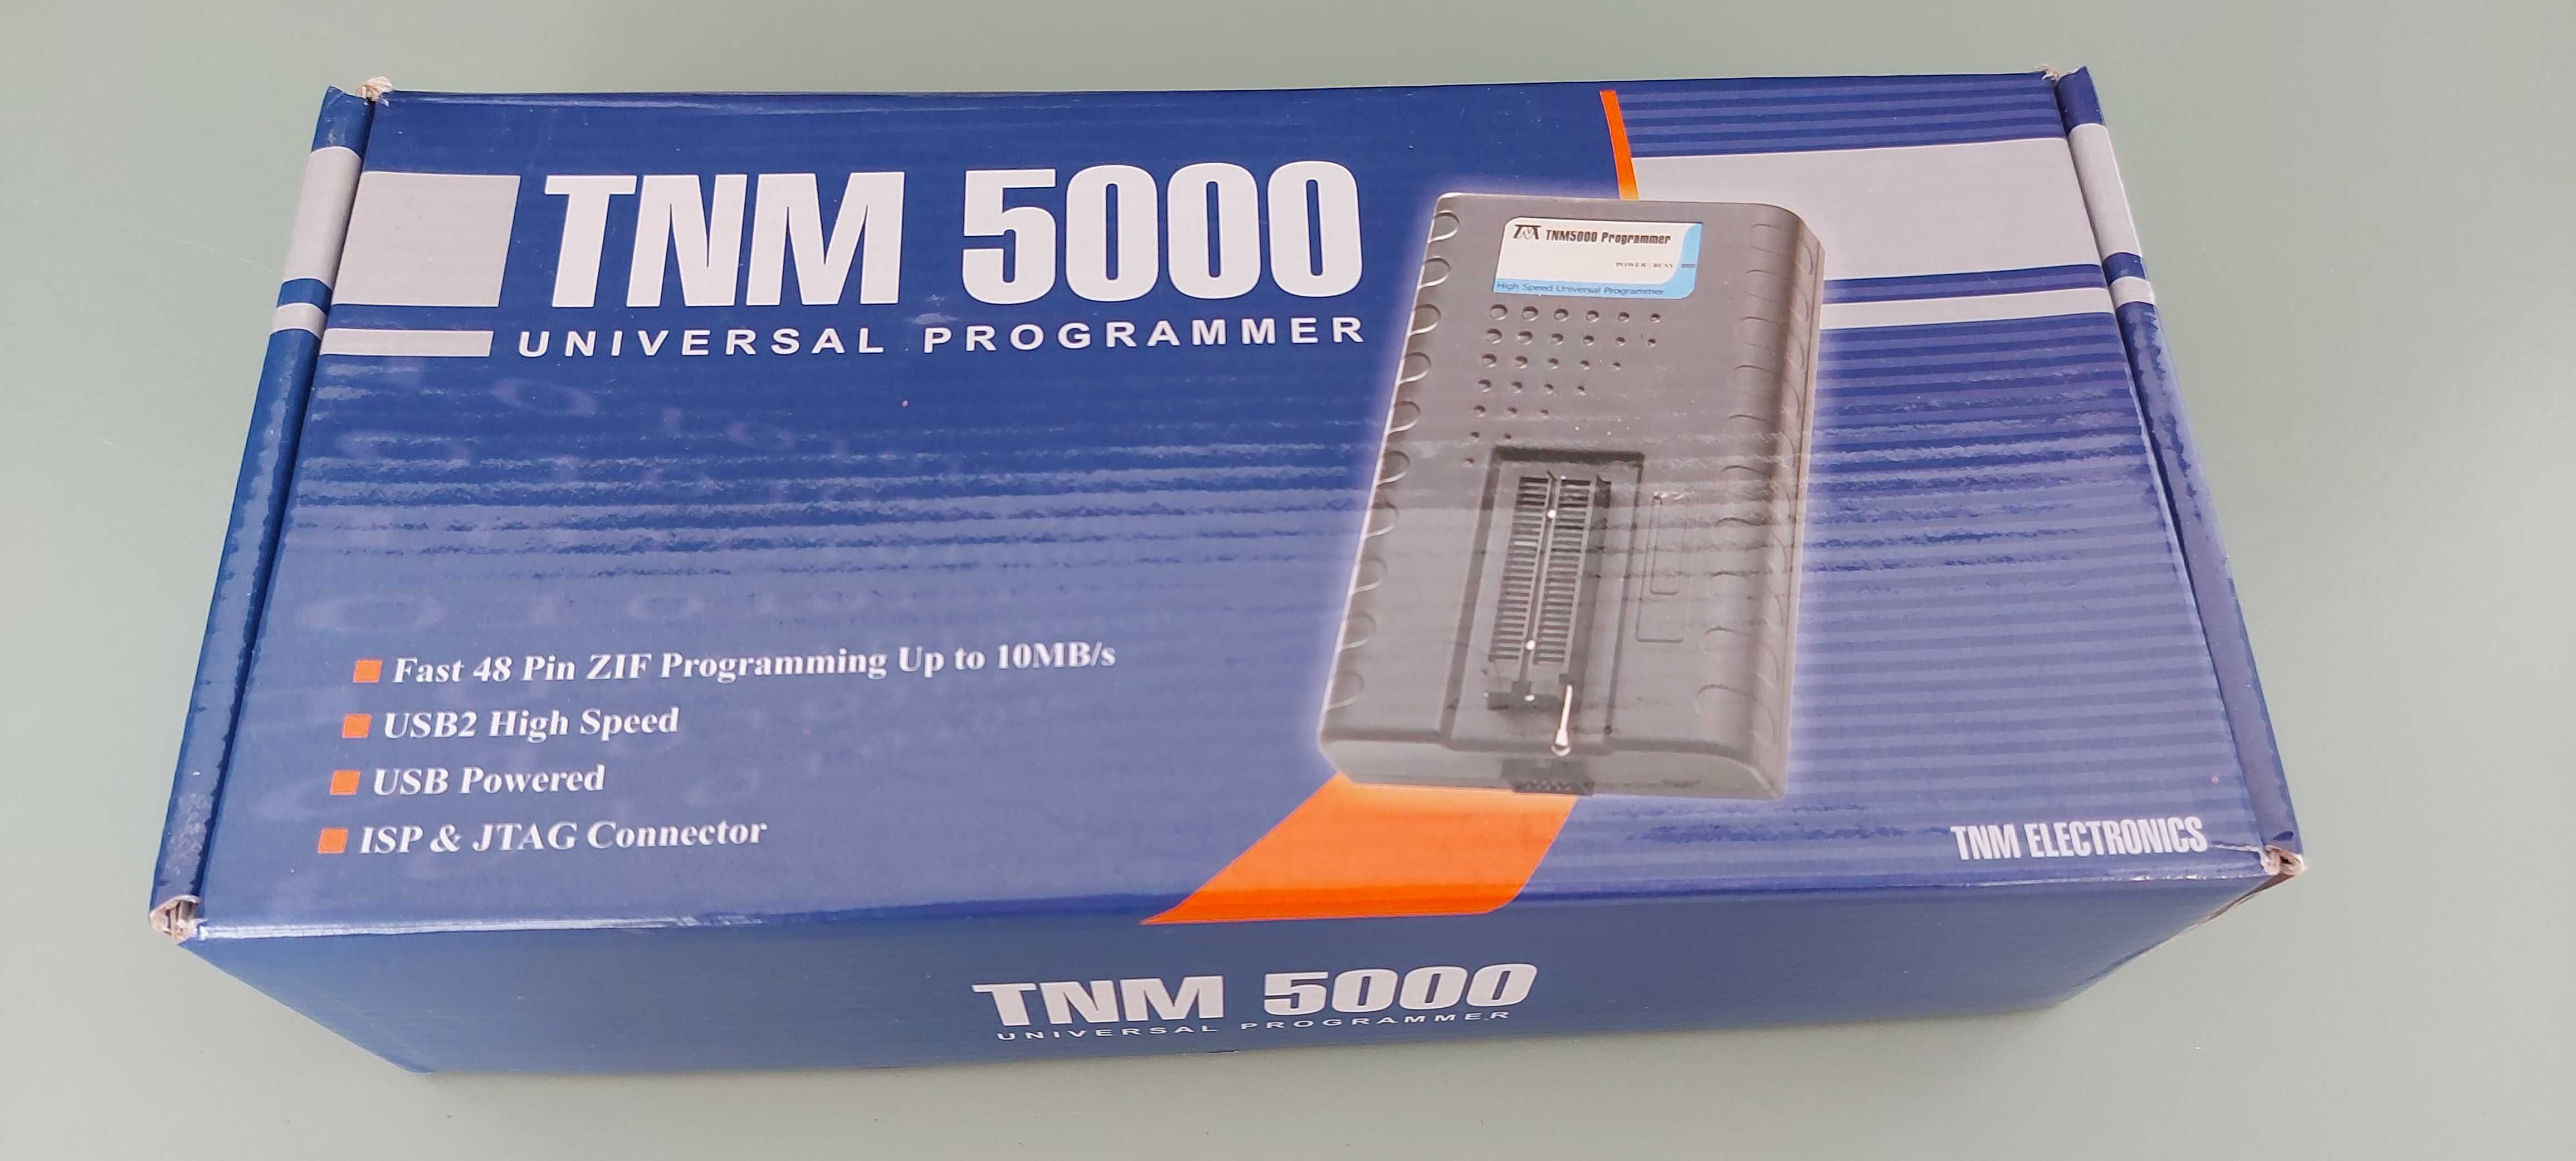 TNM5000 programator universal